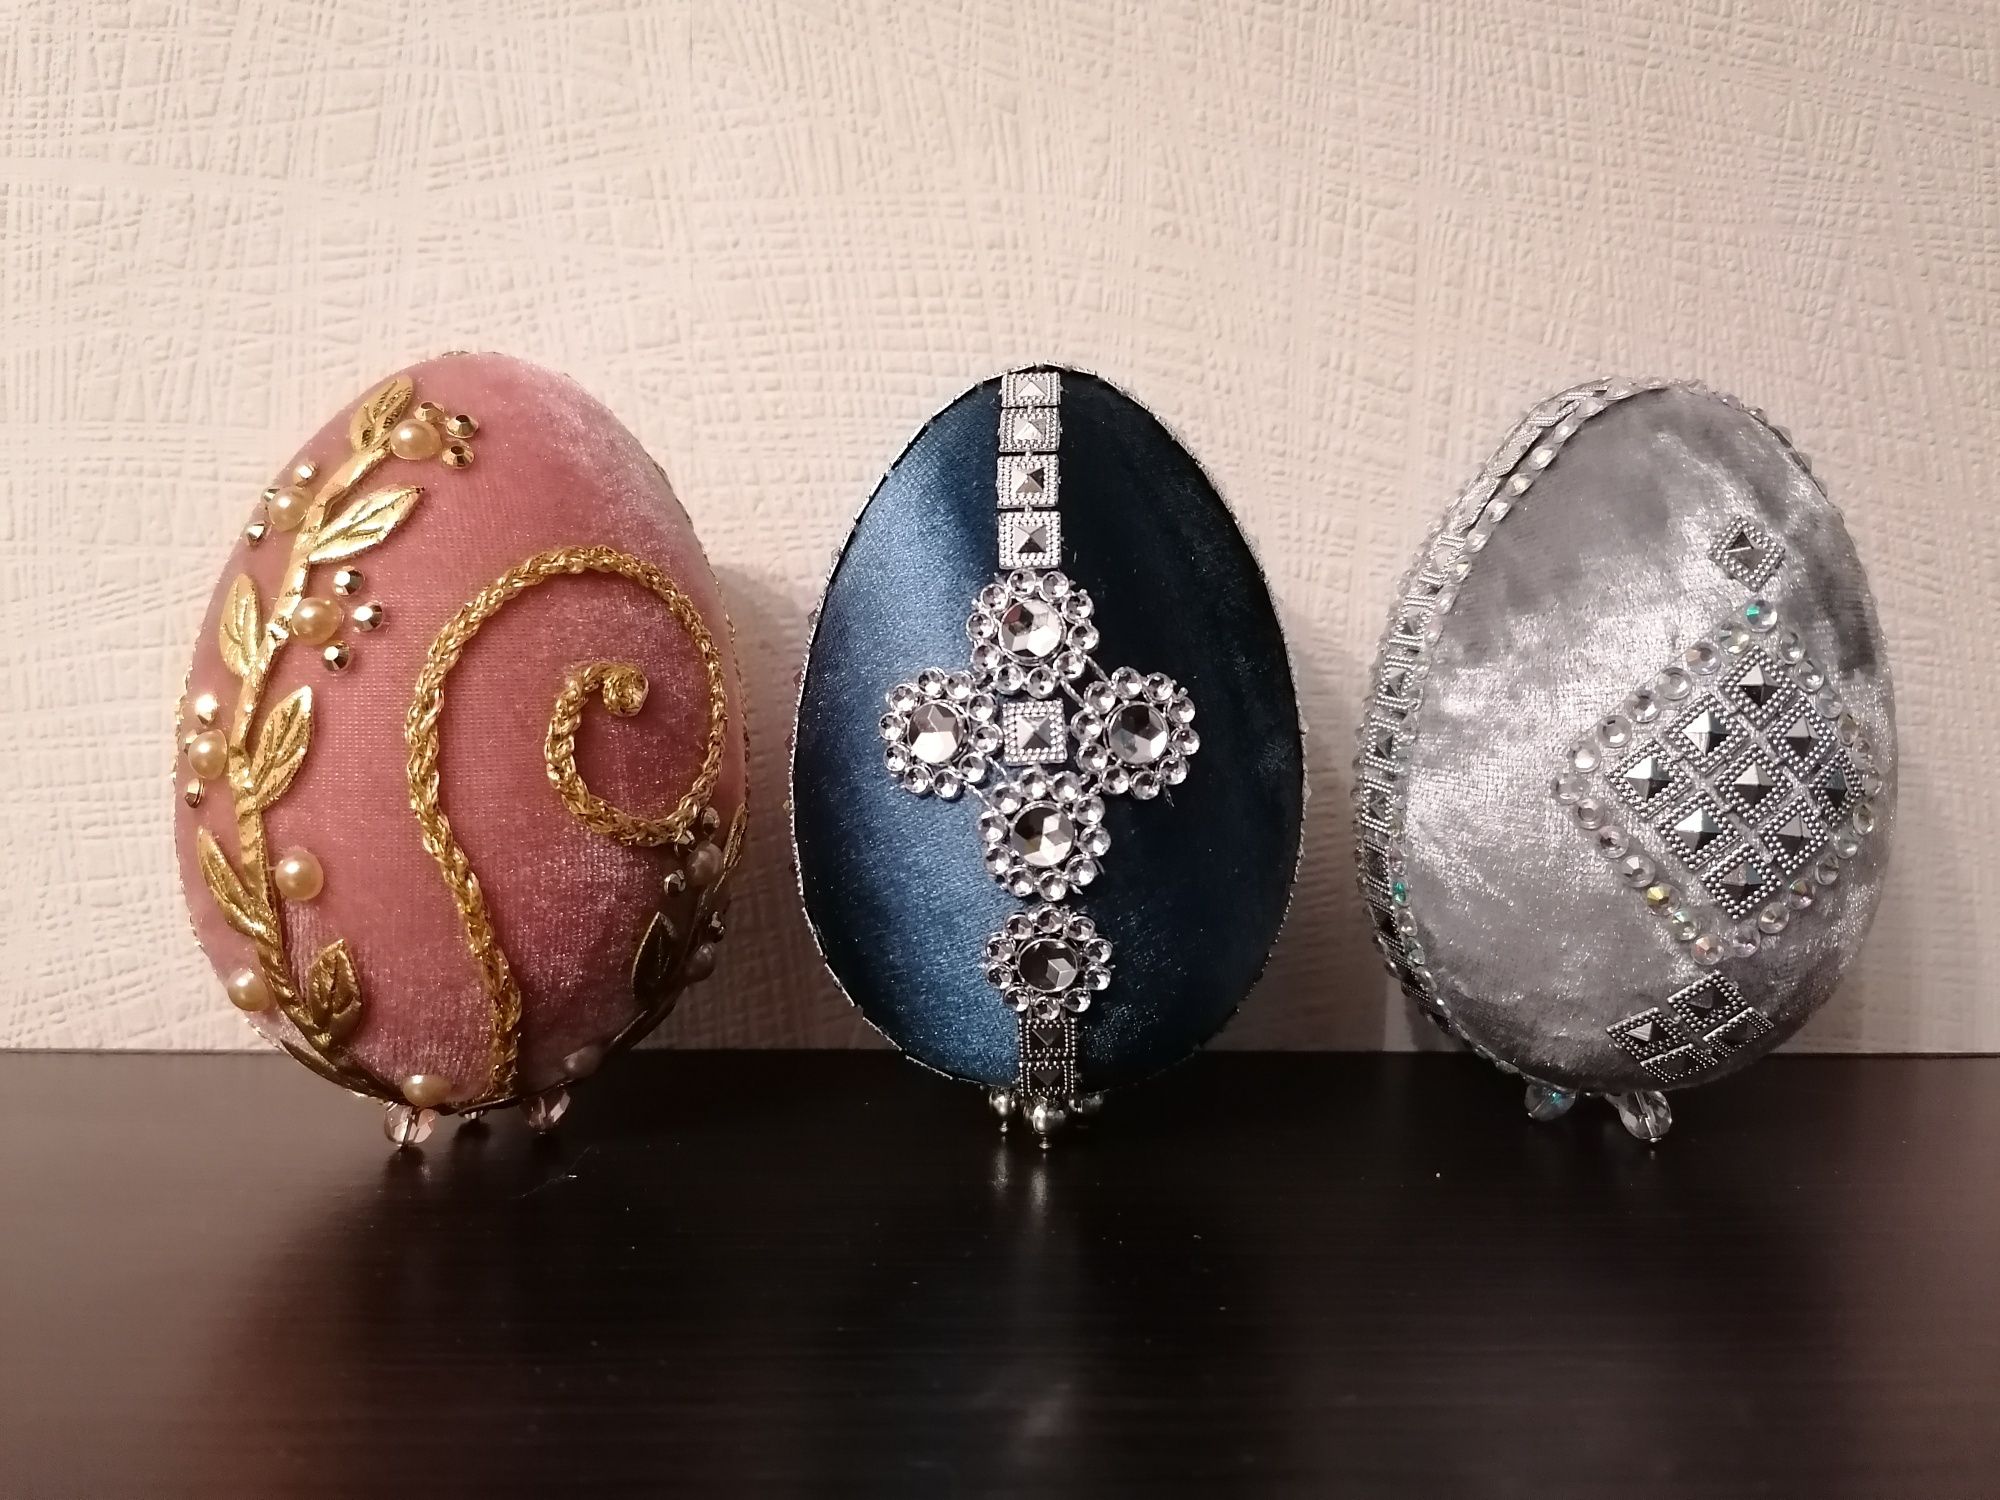 Jajka Wielkanocne, Wielkanoc, handmade, dekoracje